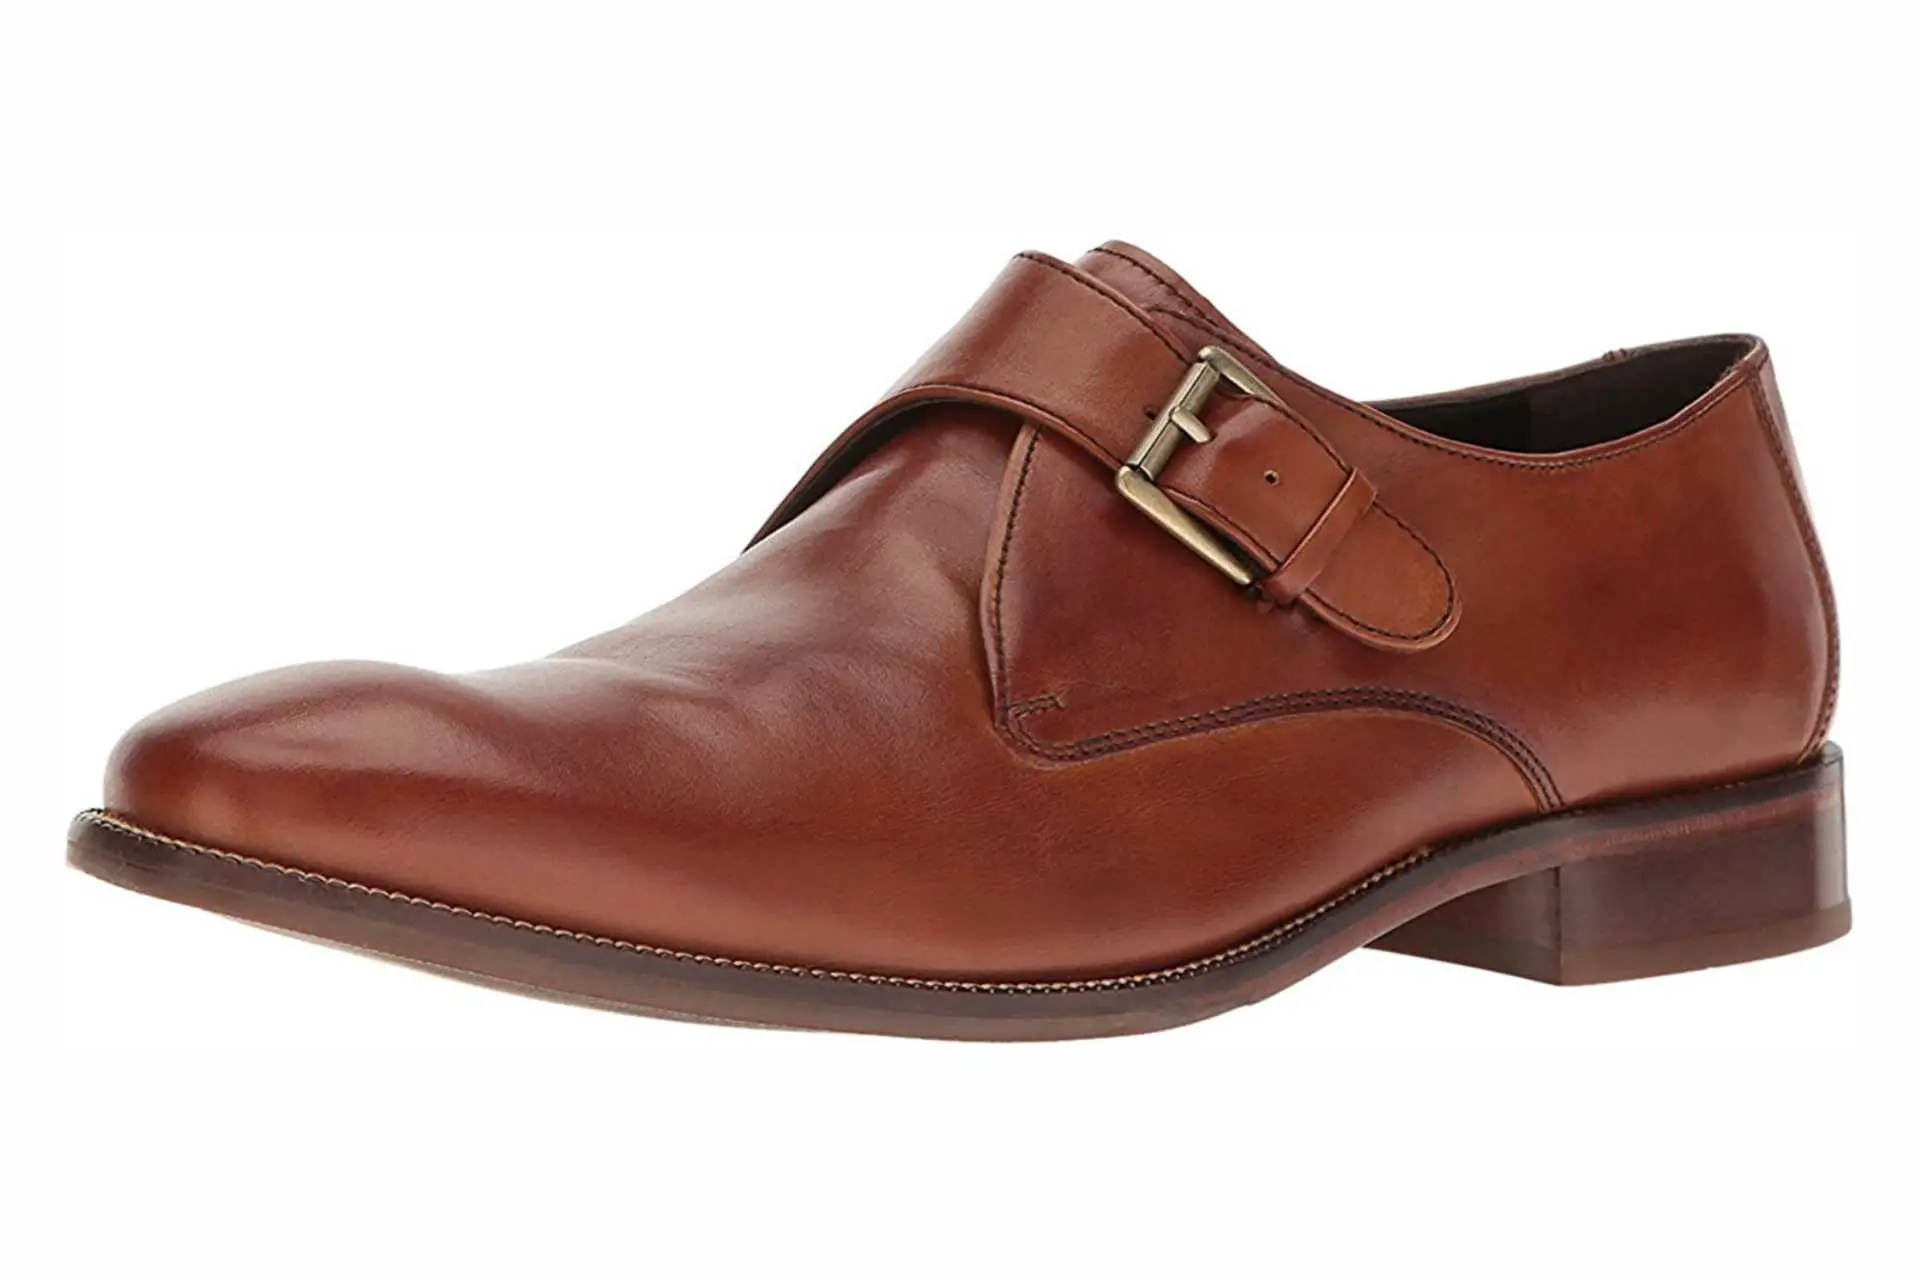 Brown Monk Strap shoes for men